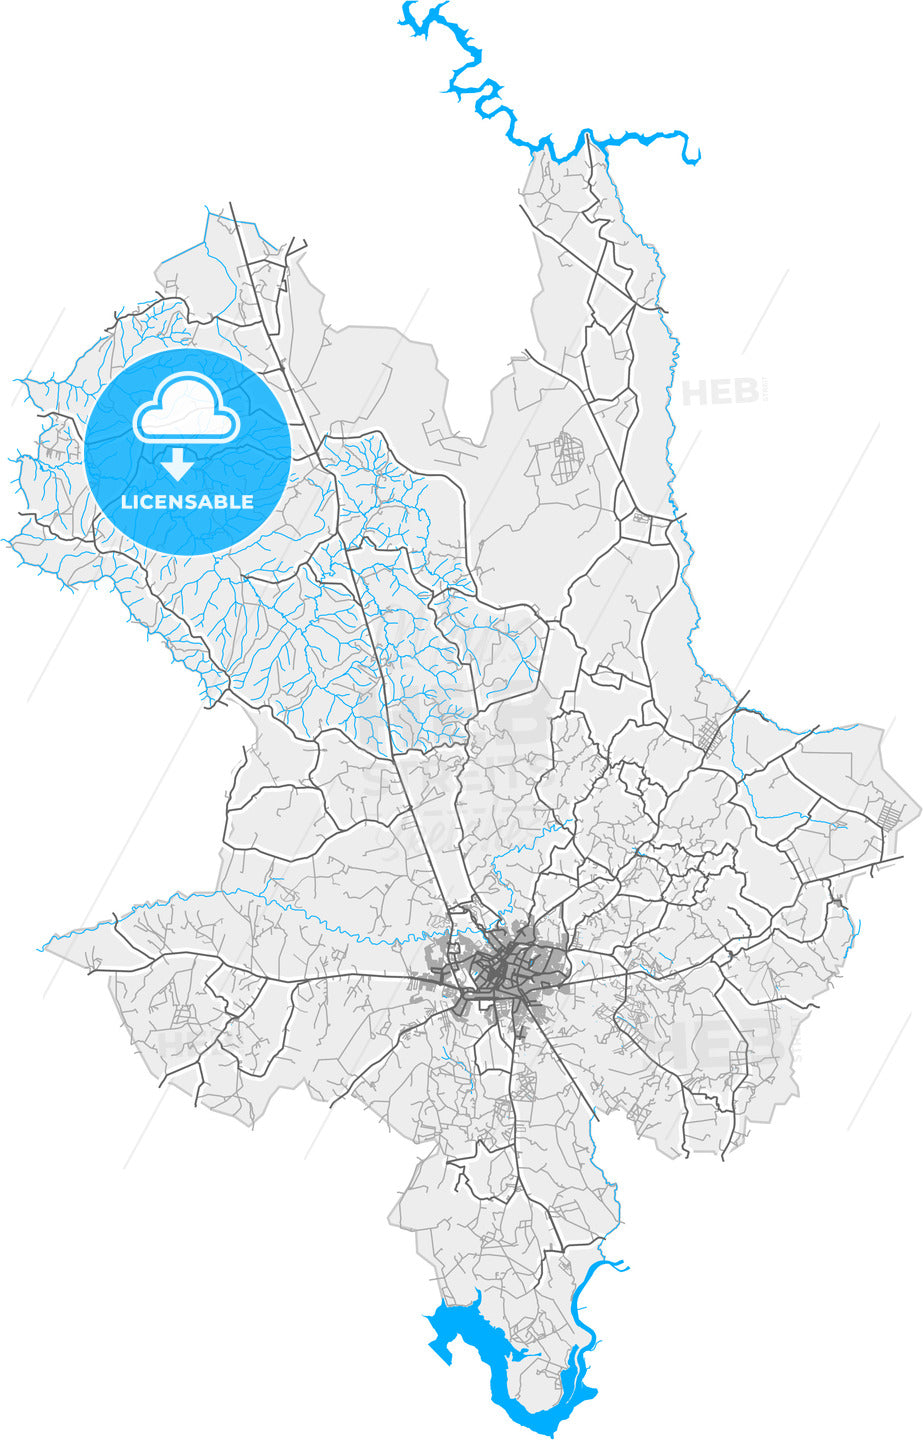 Uberaba, Brazil, high quality vector map